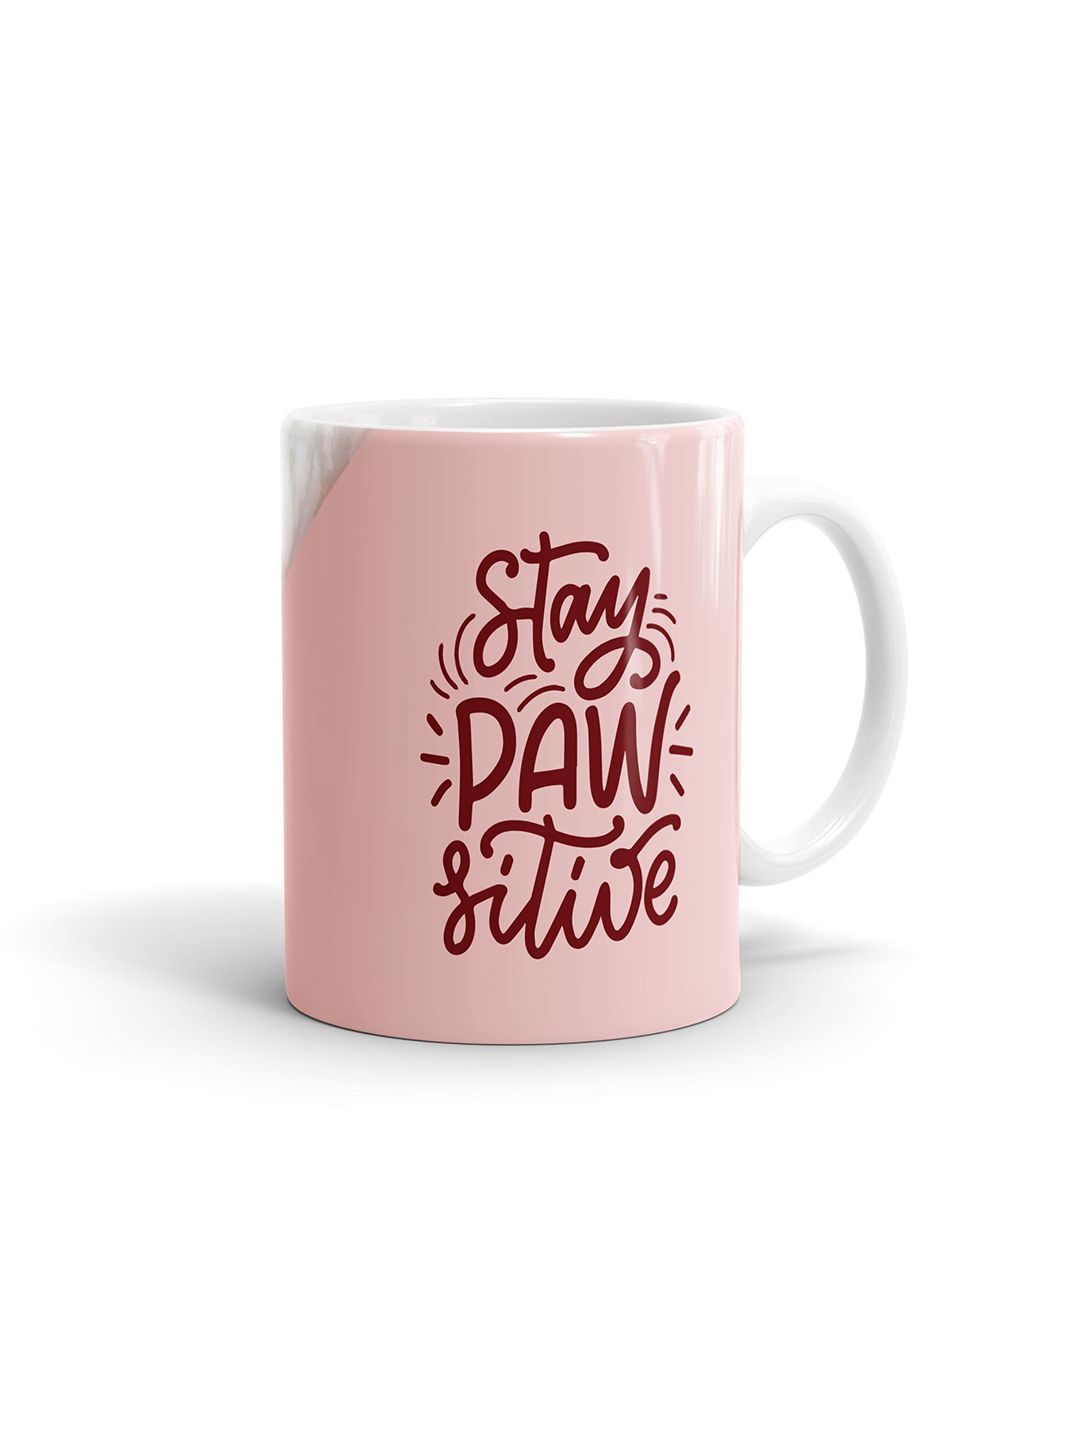 macmerise Pink & White Printed Ceramic Glossy Coffee Mug Set of Cups and Mugs Price in India